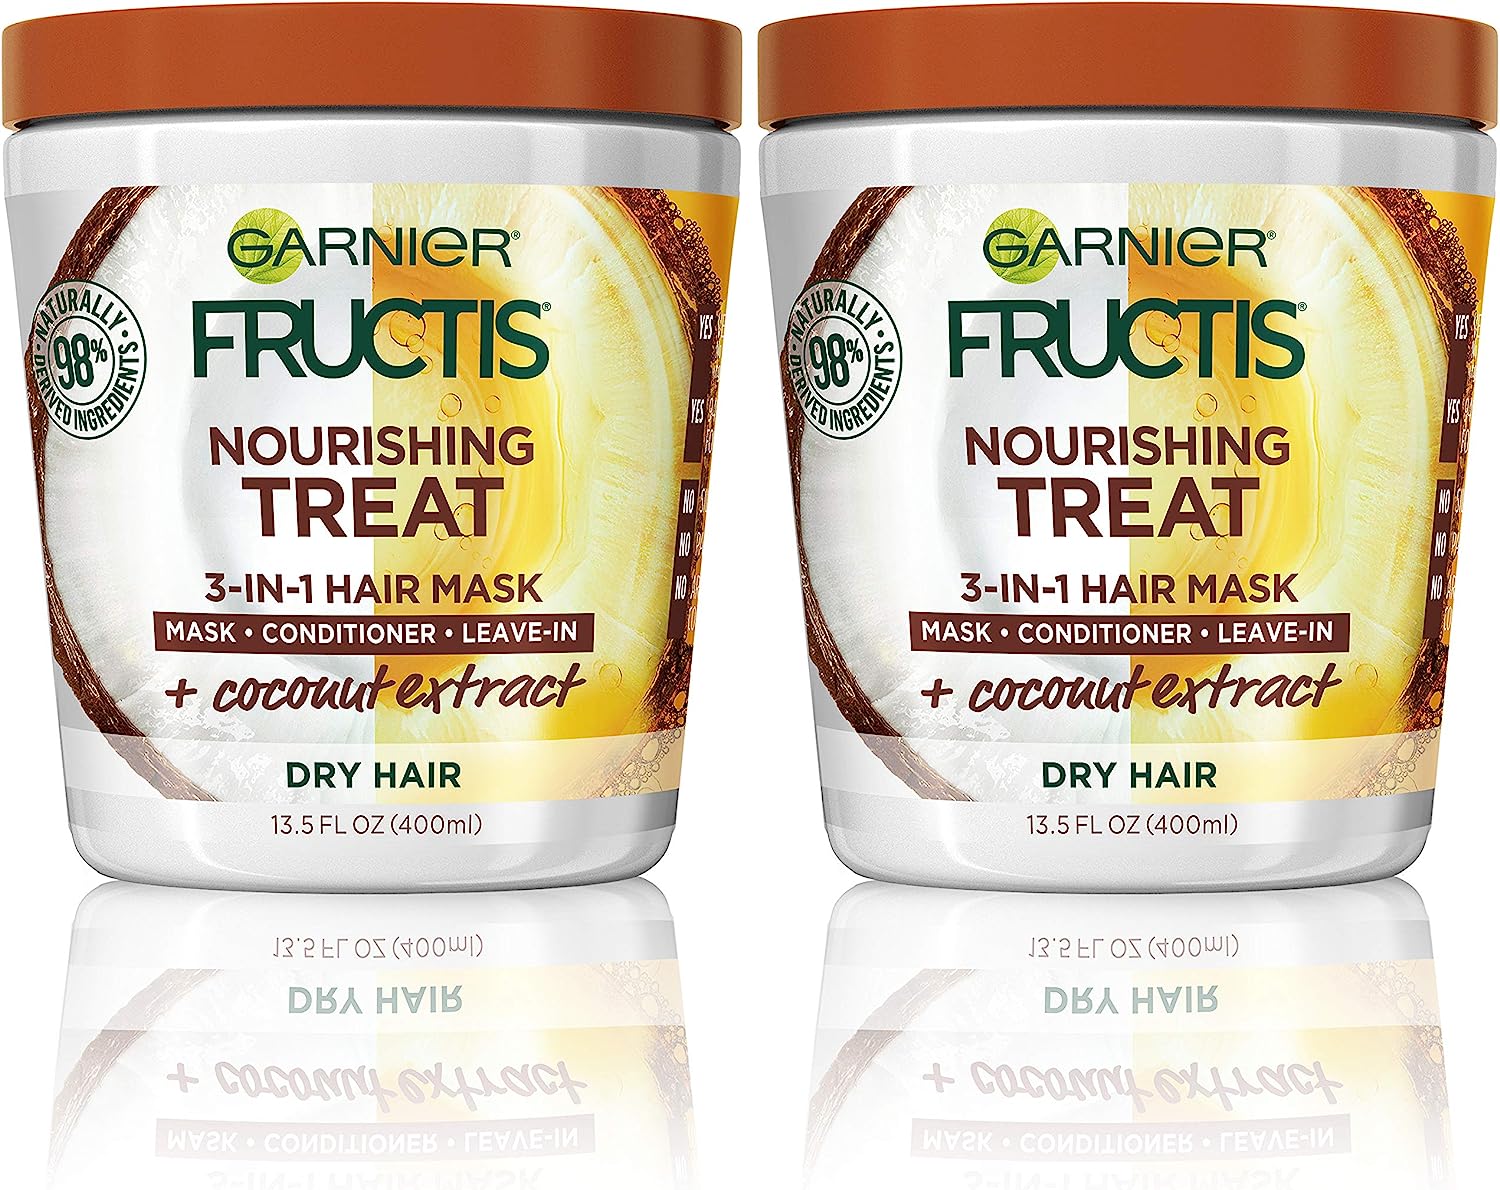 Garnier Fructis Nourishing Treat 3-in-1 Hair Mask [...]